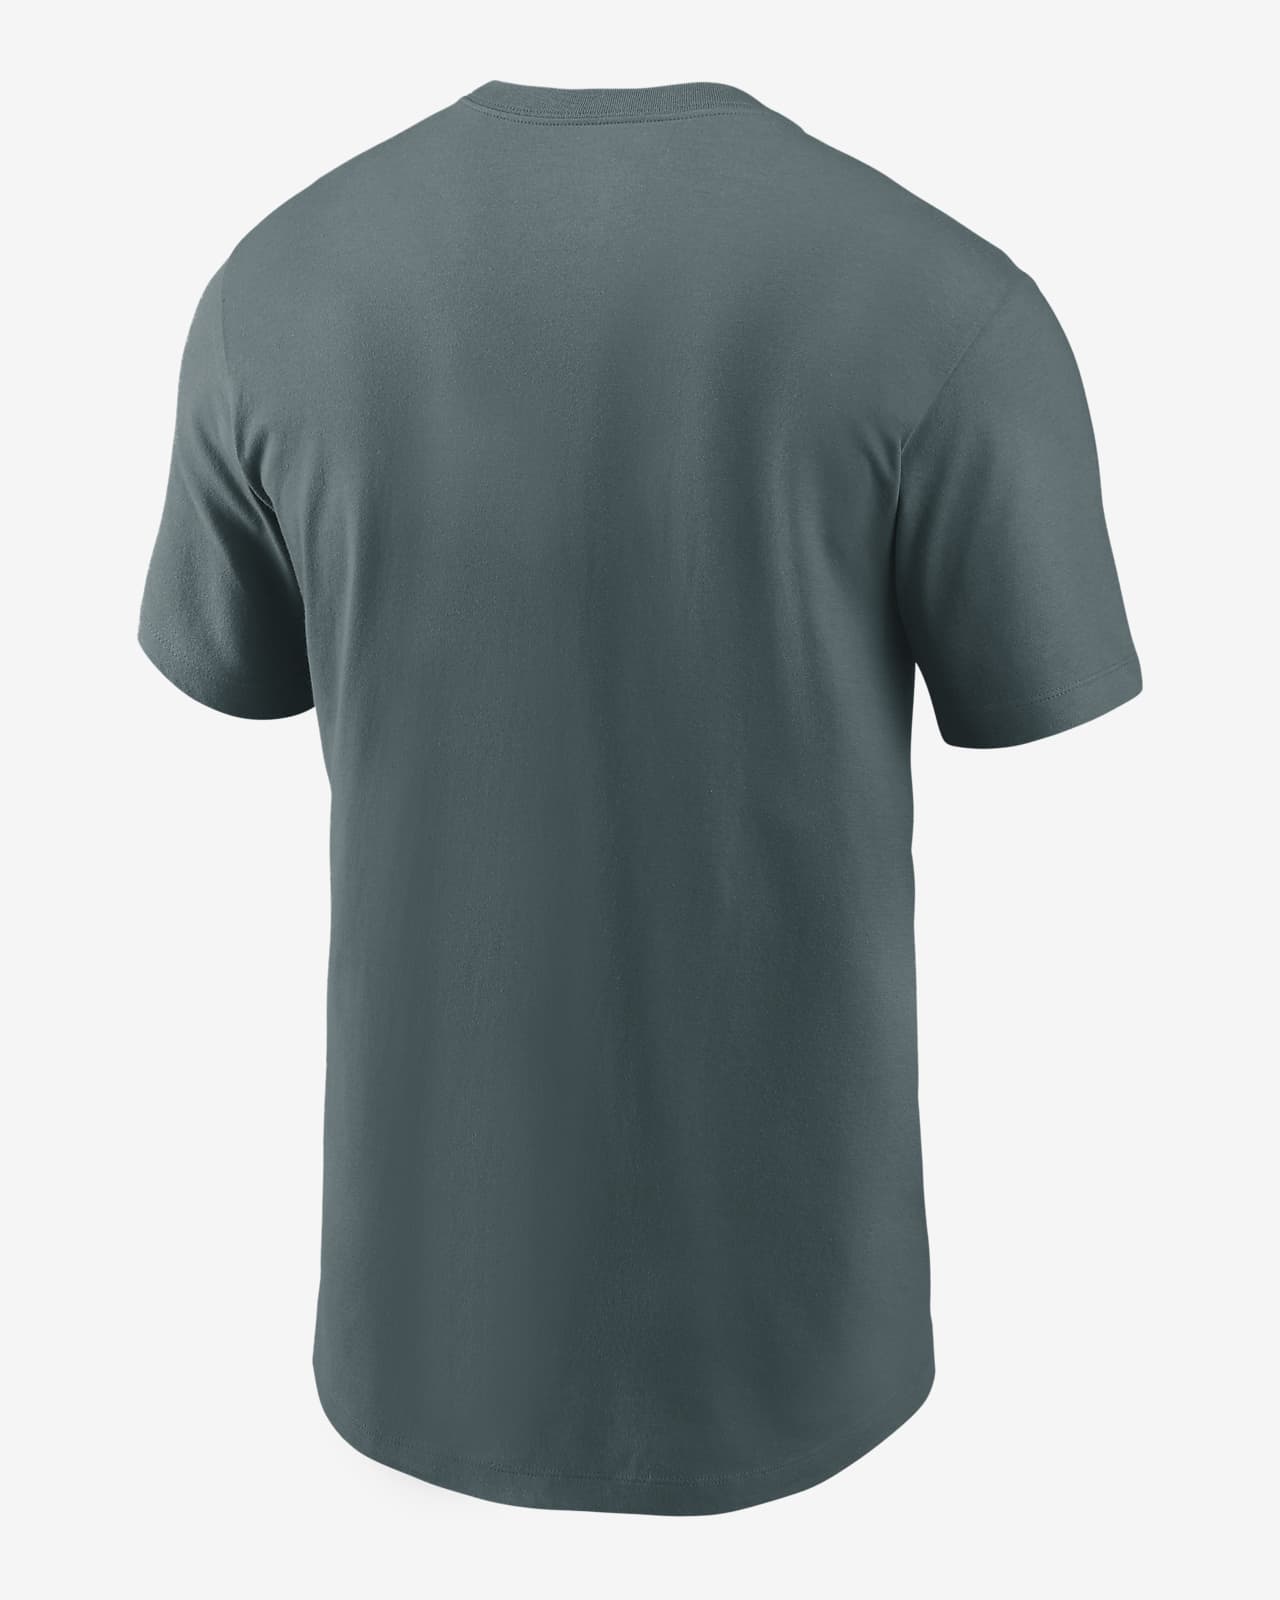 Nike, Shirts, Philadelphia Eagles Nike Golf Polo Gray Size M